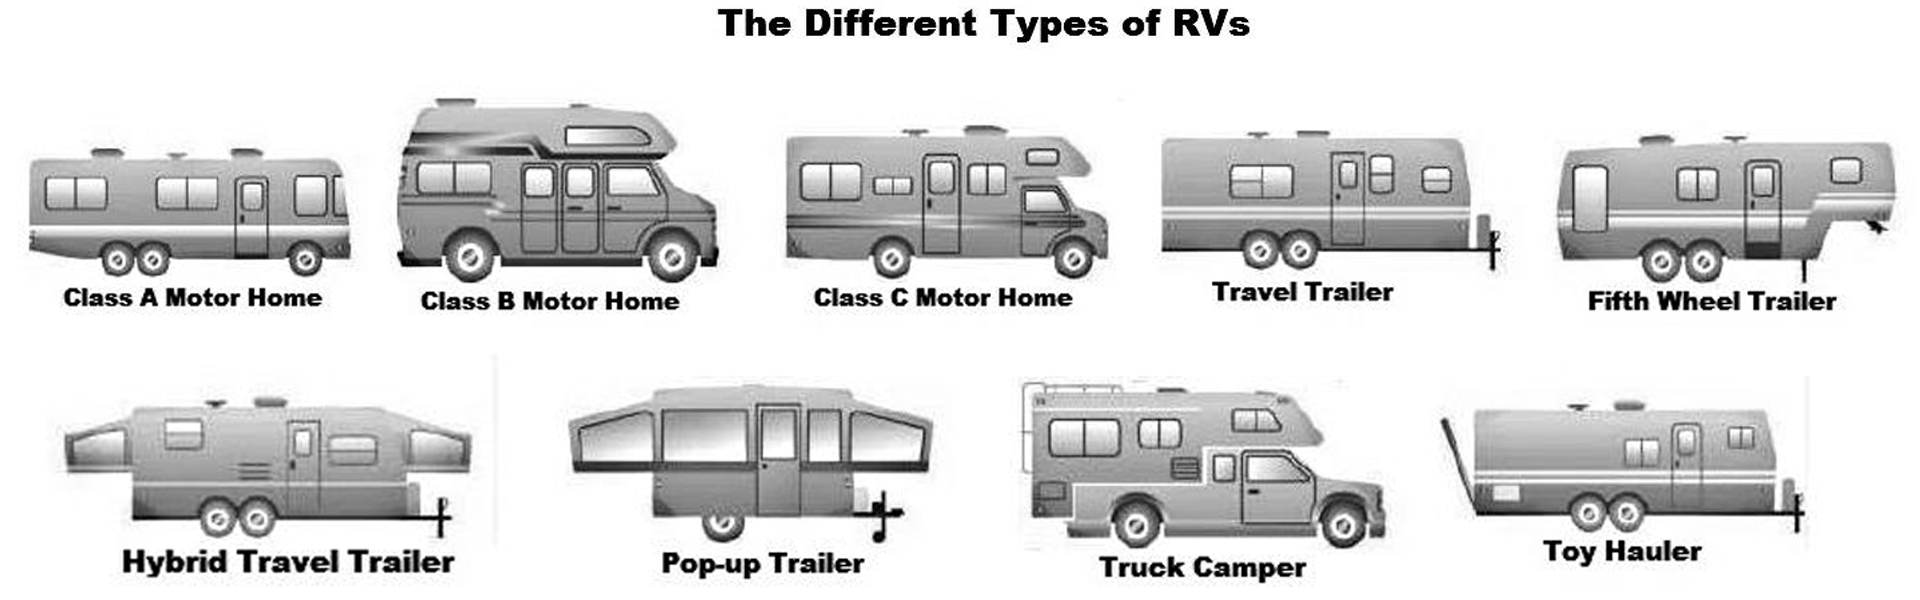 different-types-rvs.jpg